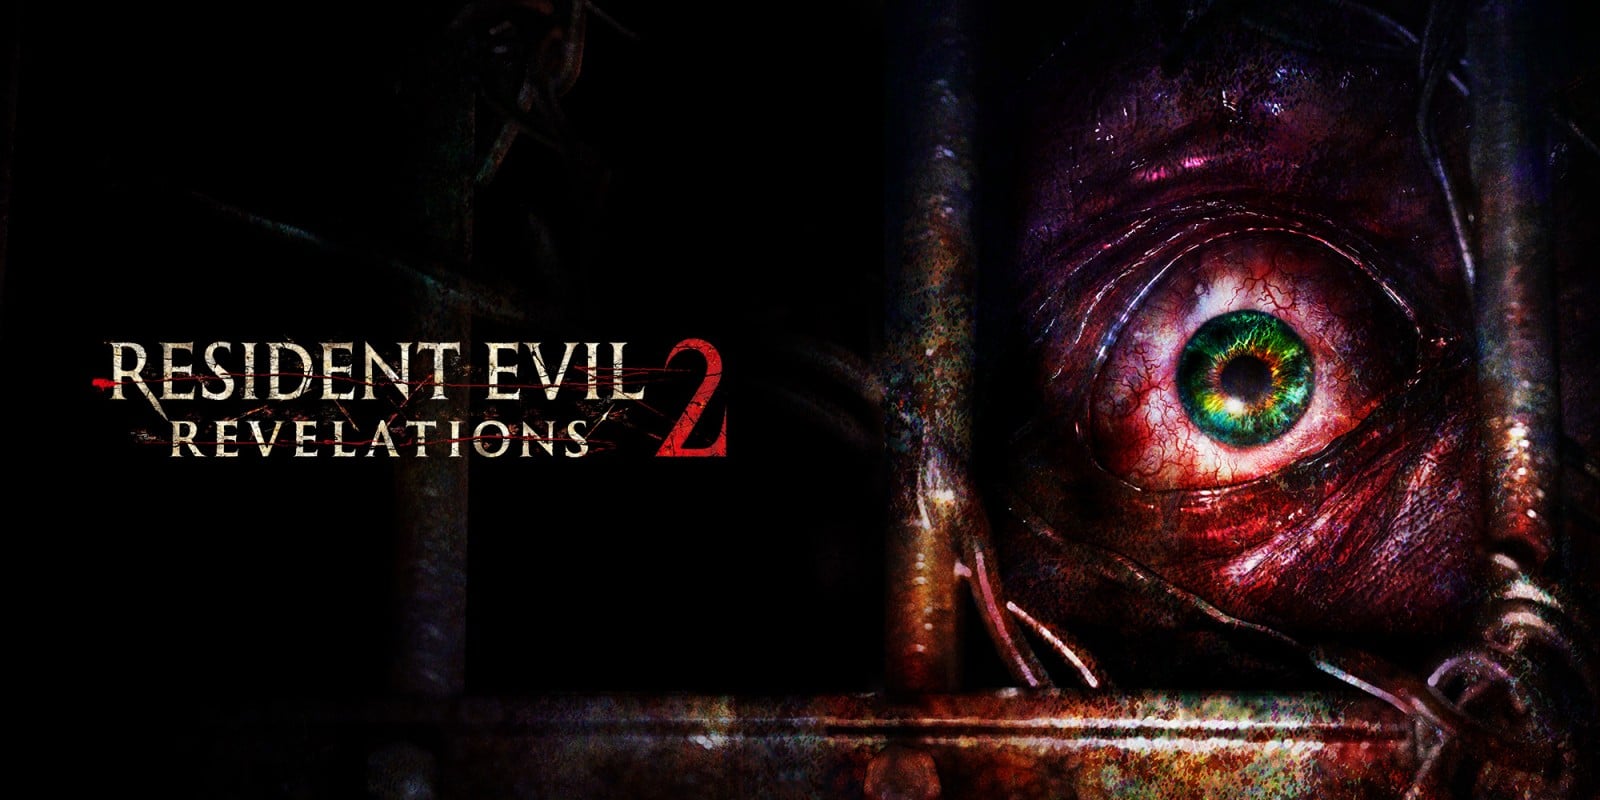 Resident Evil 2 lore